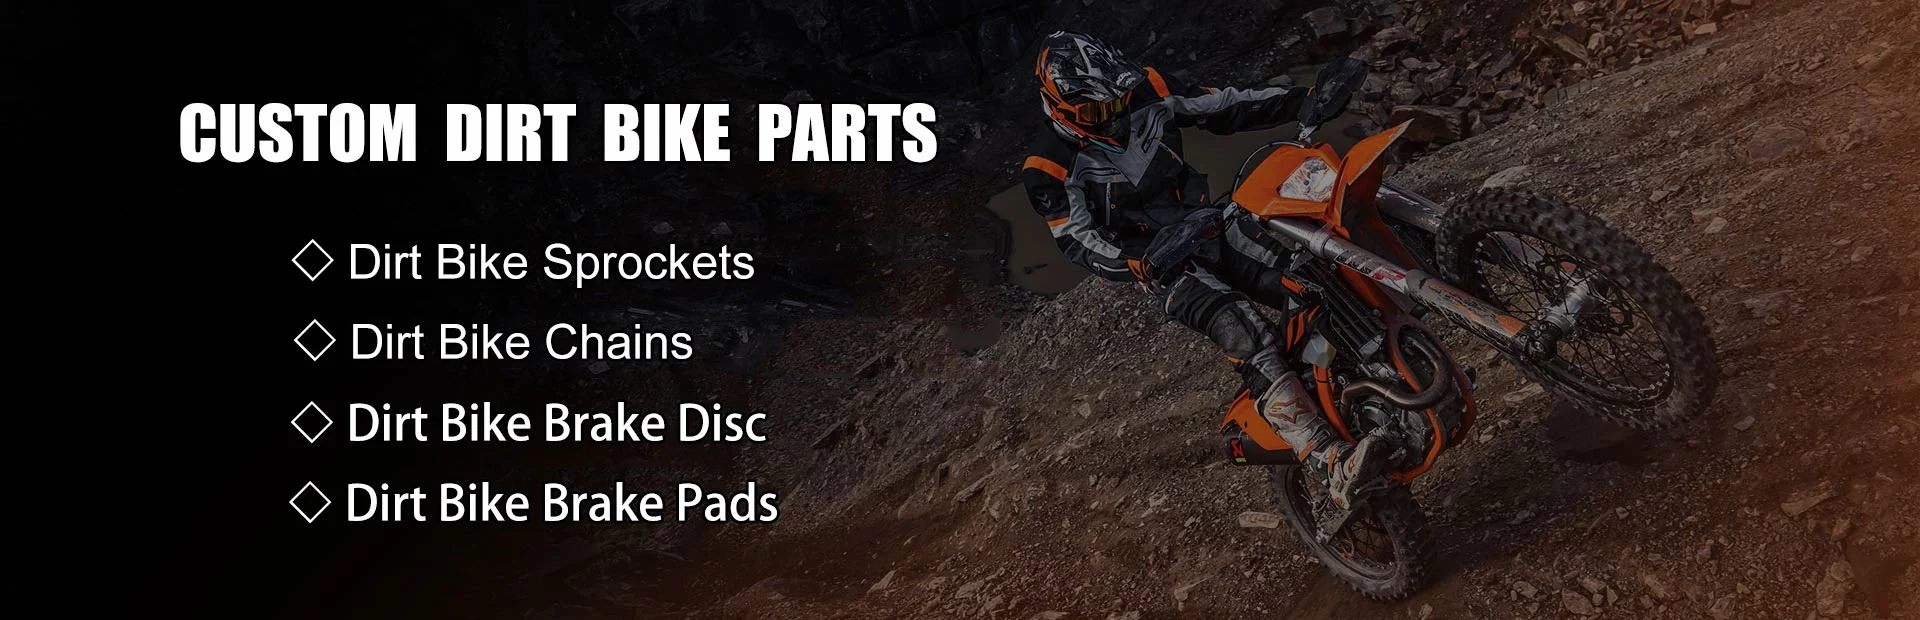 Dirt bike parts